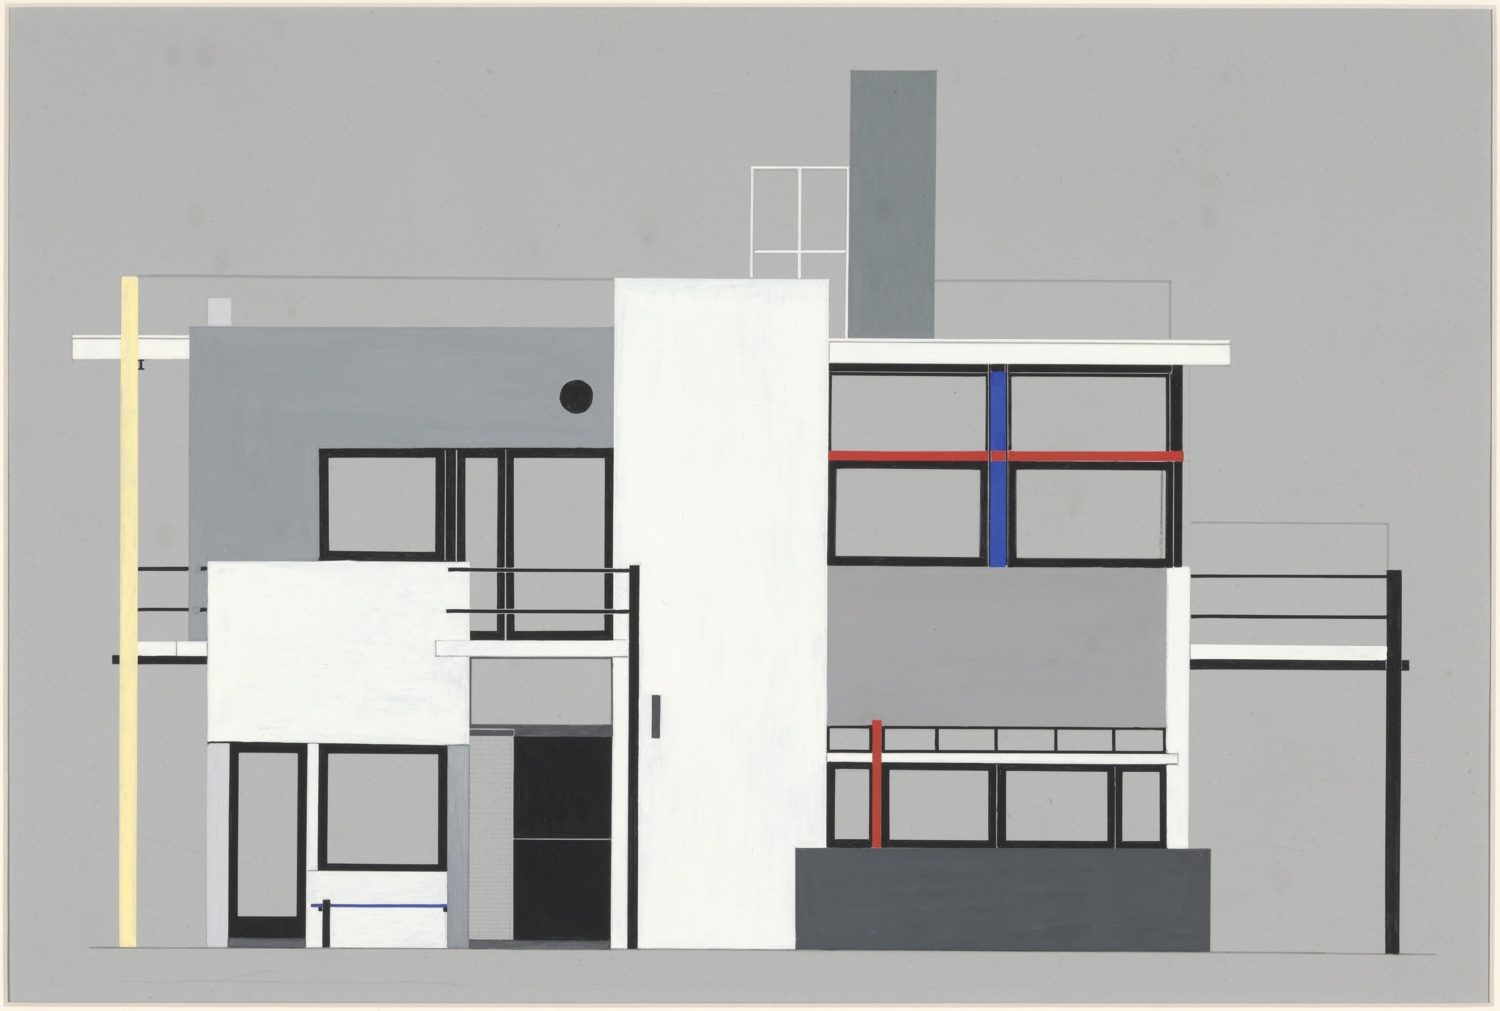 Gerrit Rietveld’s plan for the Schröder house